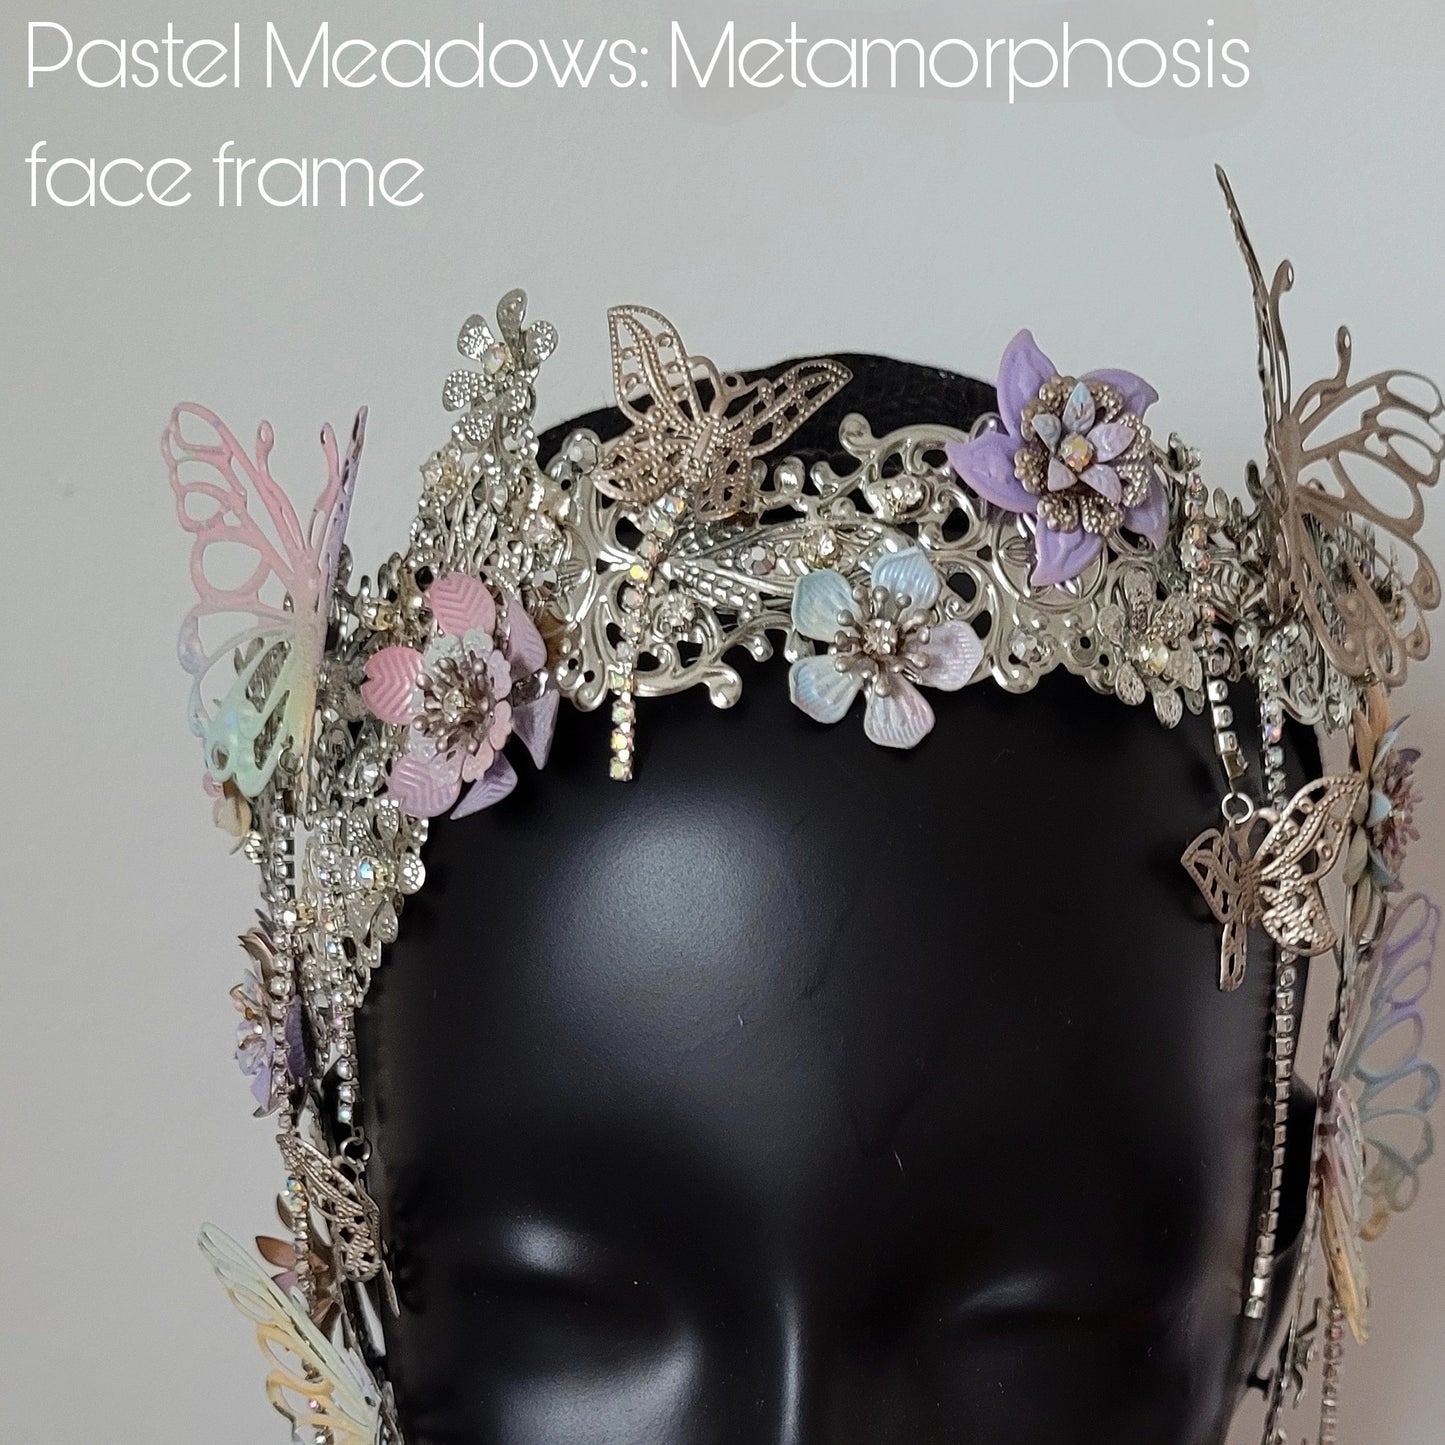 The Pastel Meadows: Metamorphosis face frame, wearable art piece